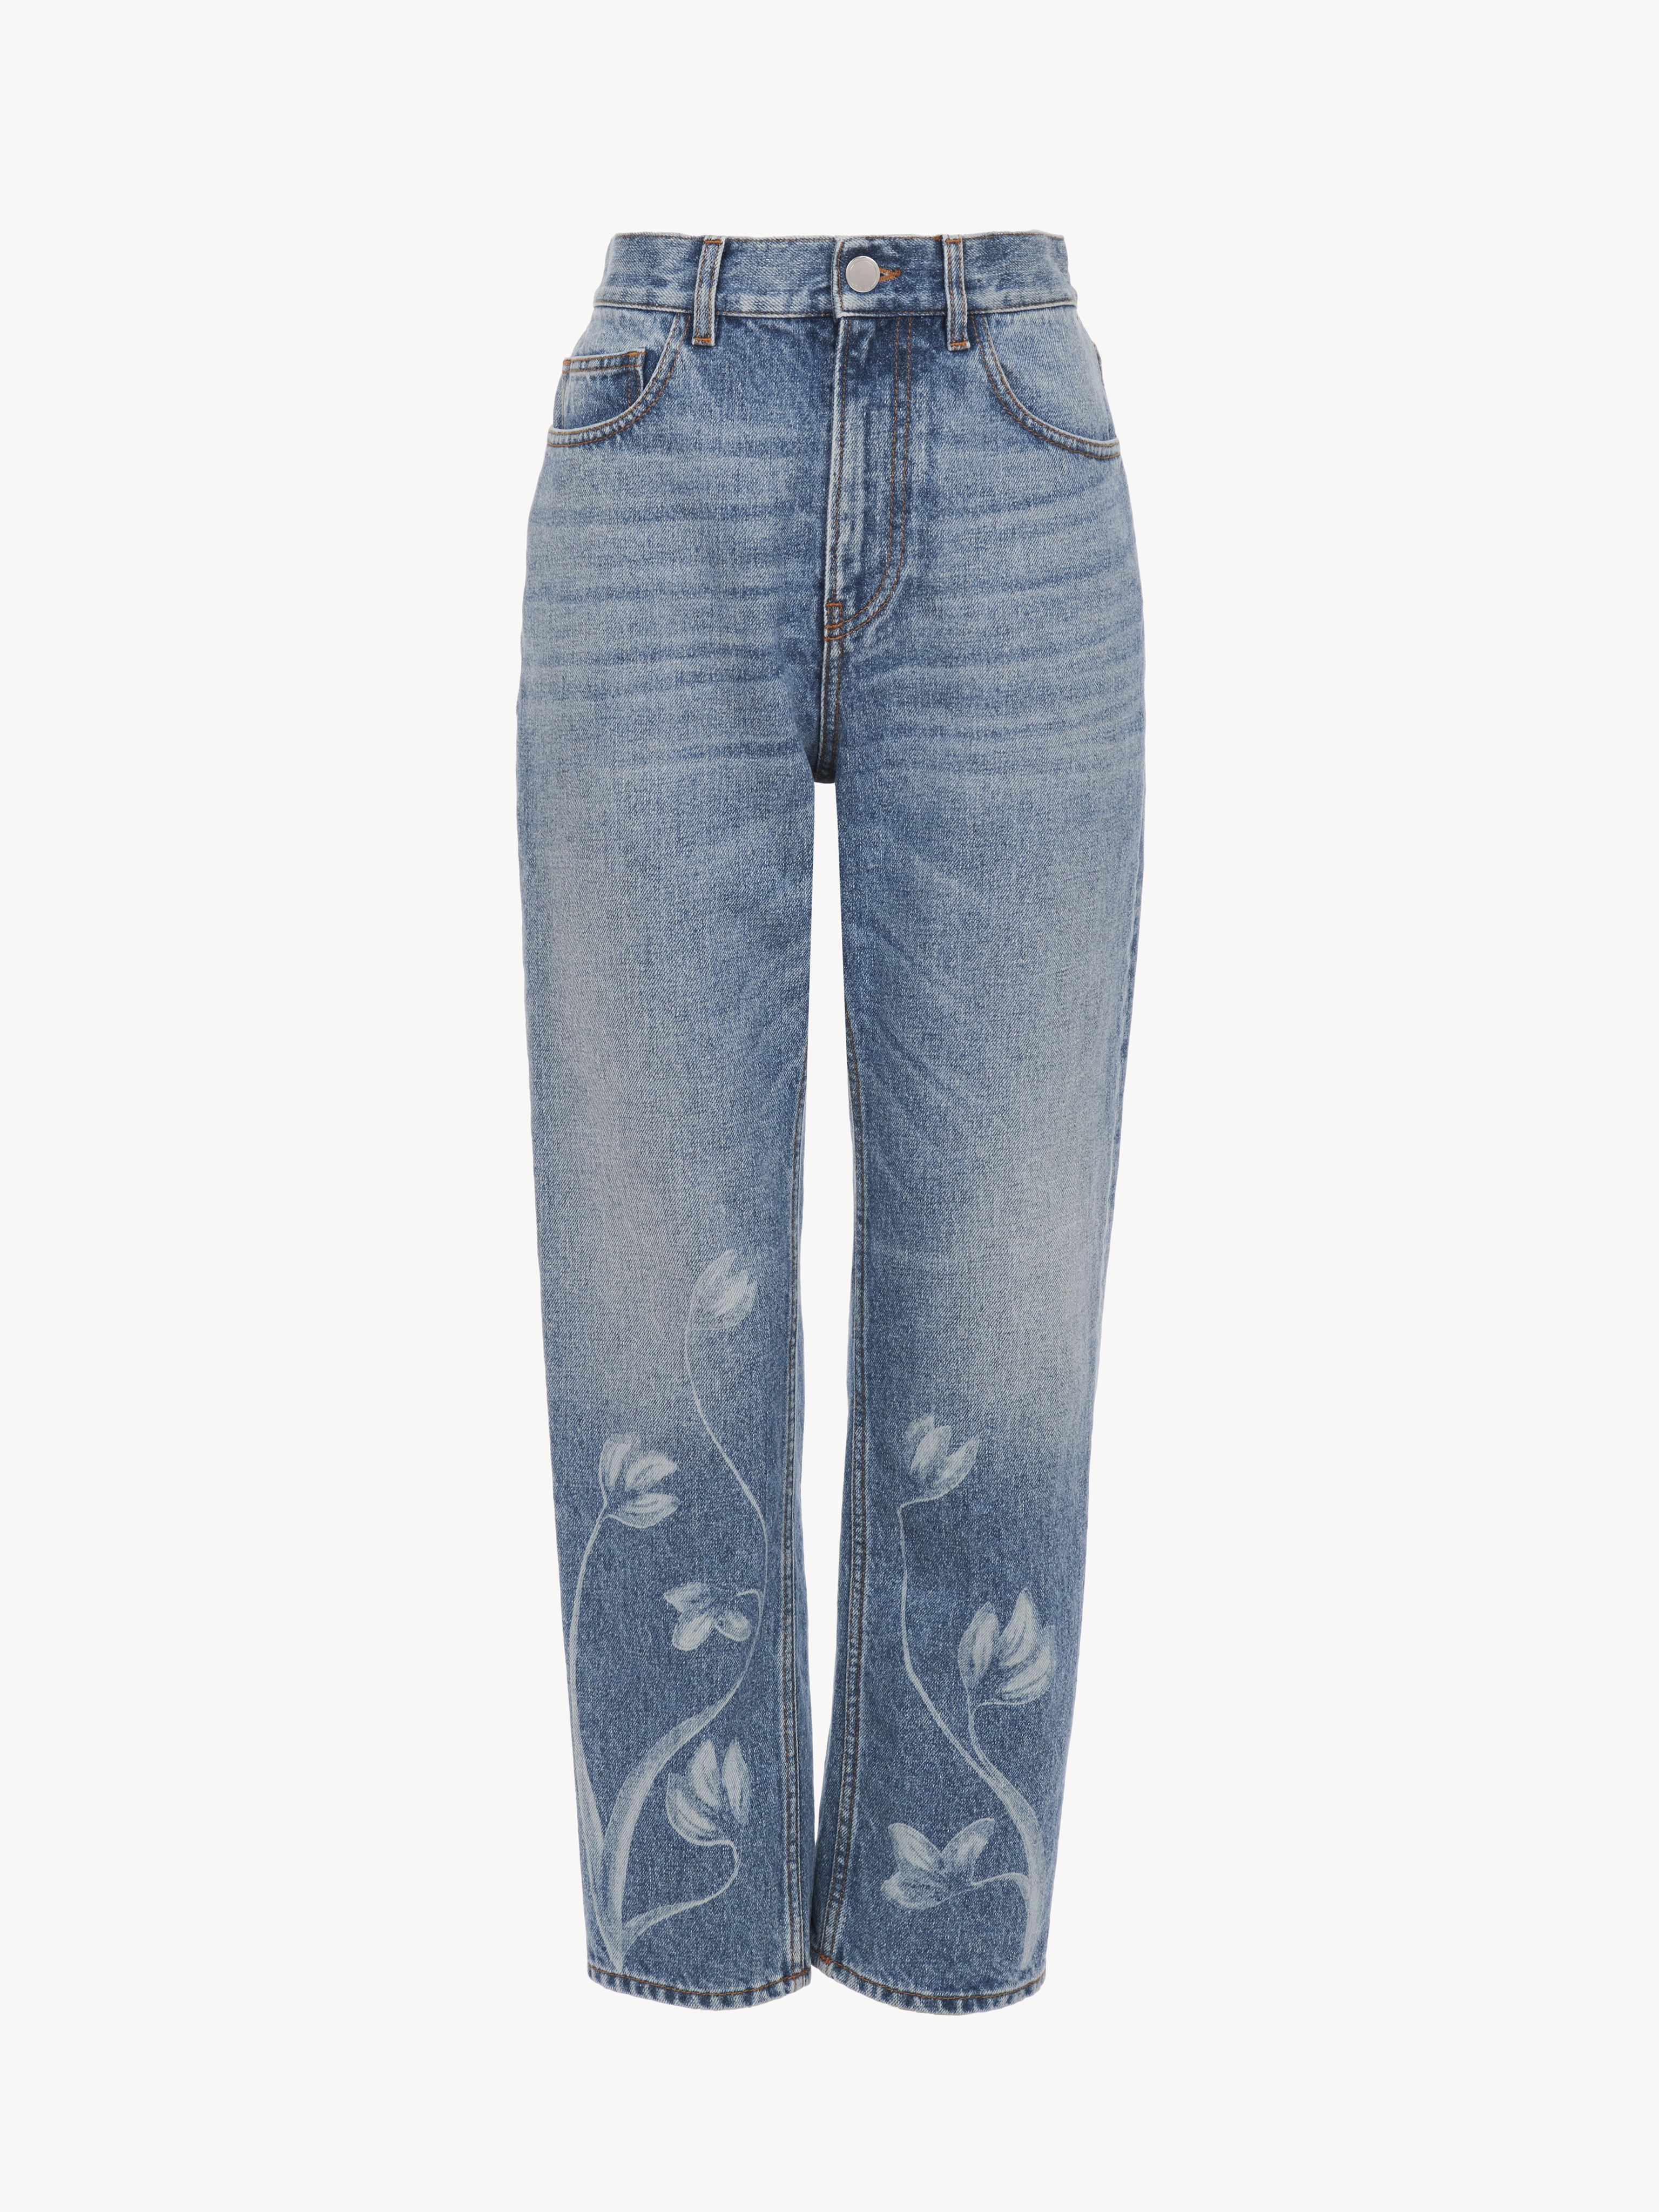 Chloé Straight Cropped Jeans Blue Size 27 87% Cotton, 13% Hemp